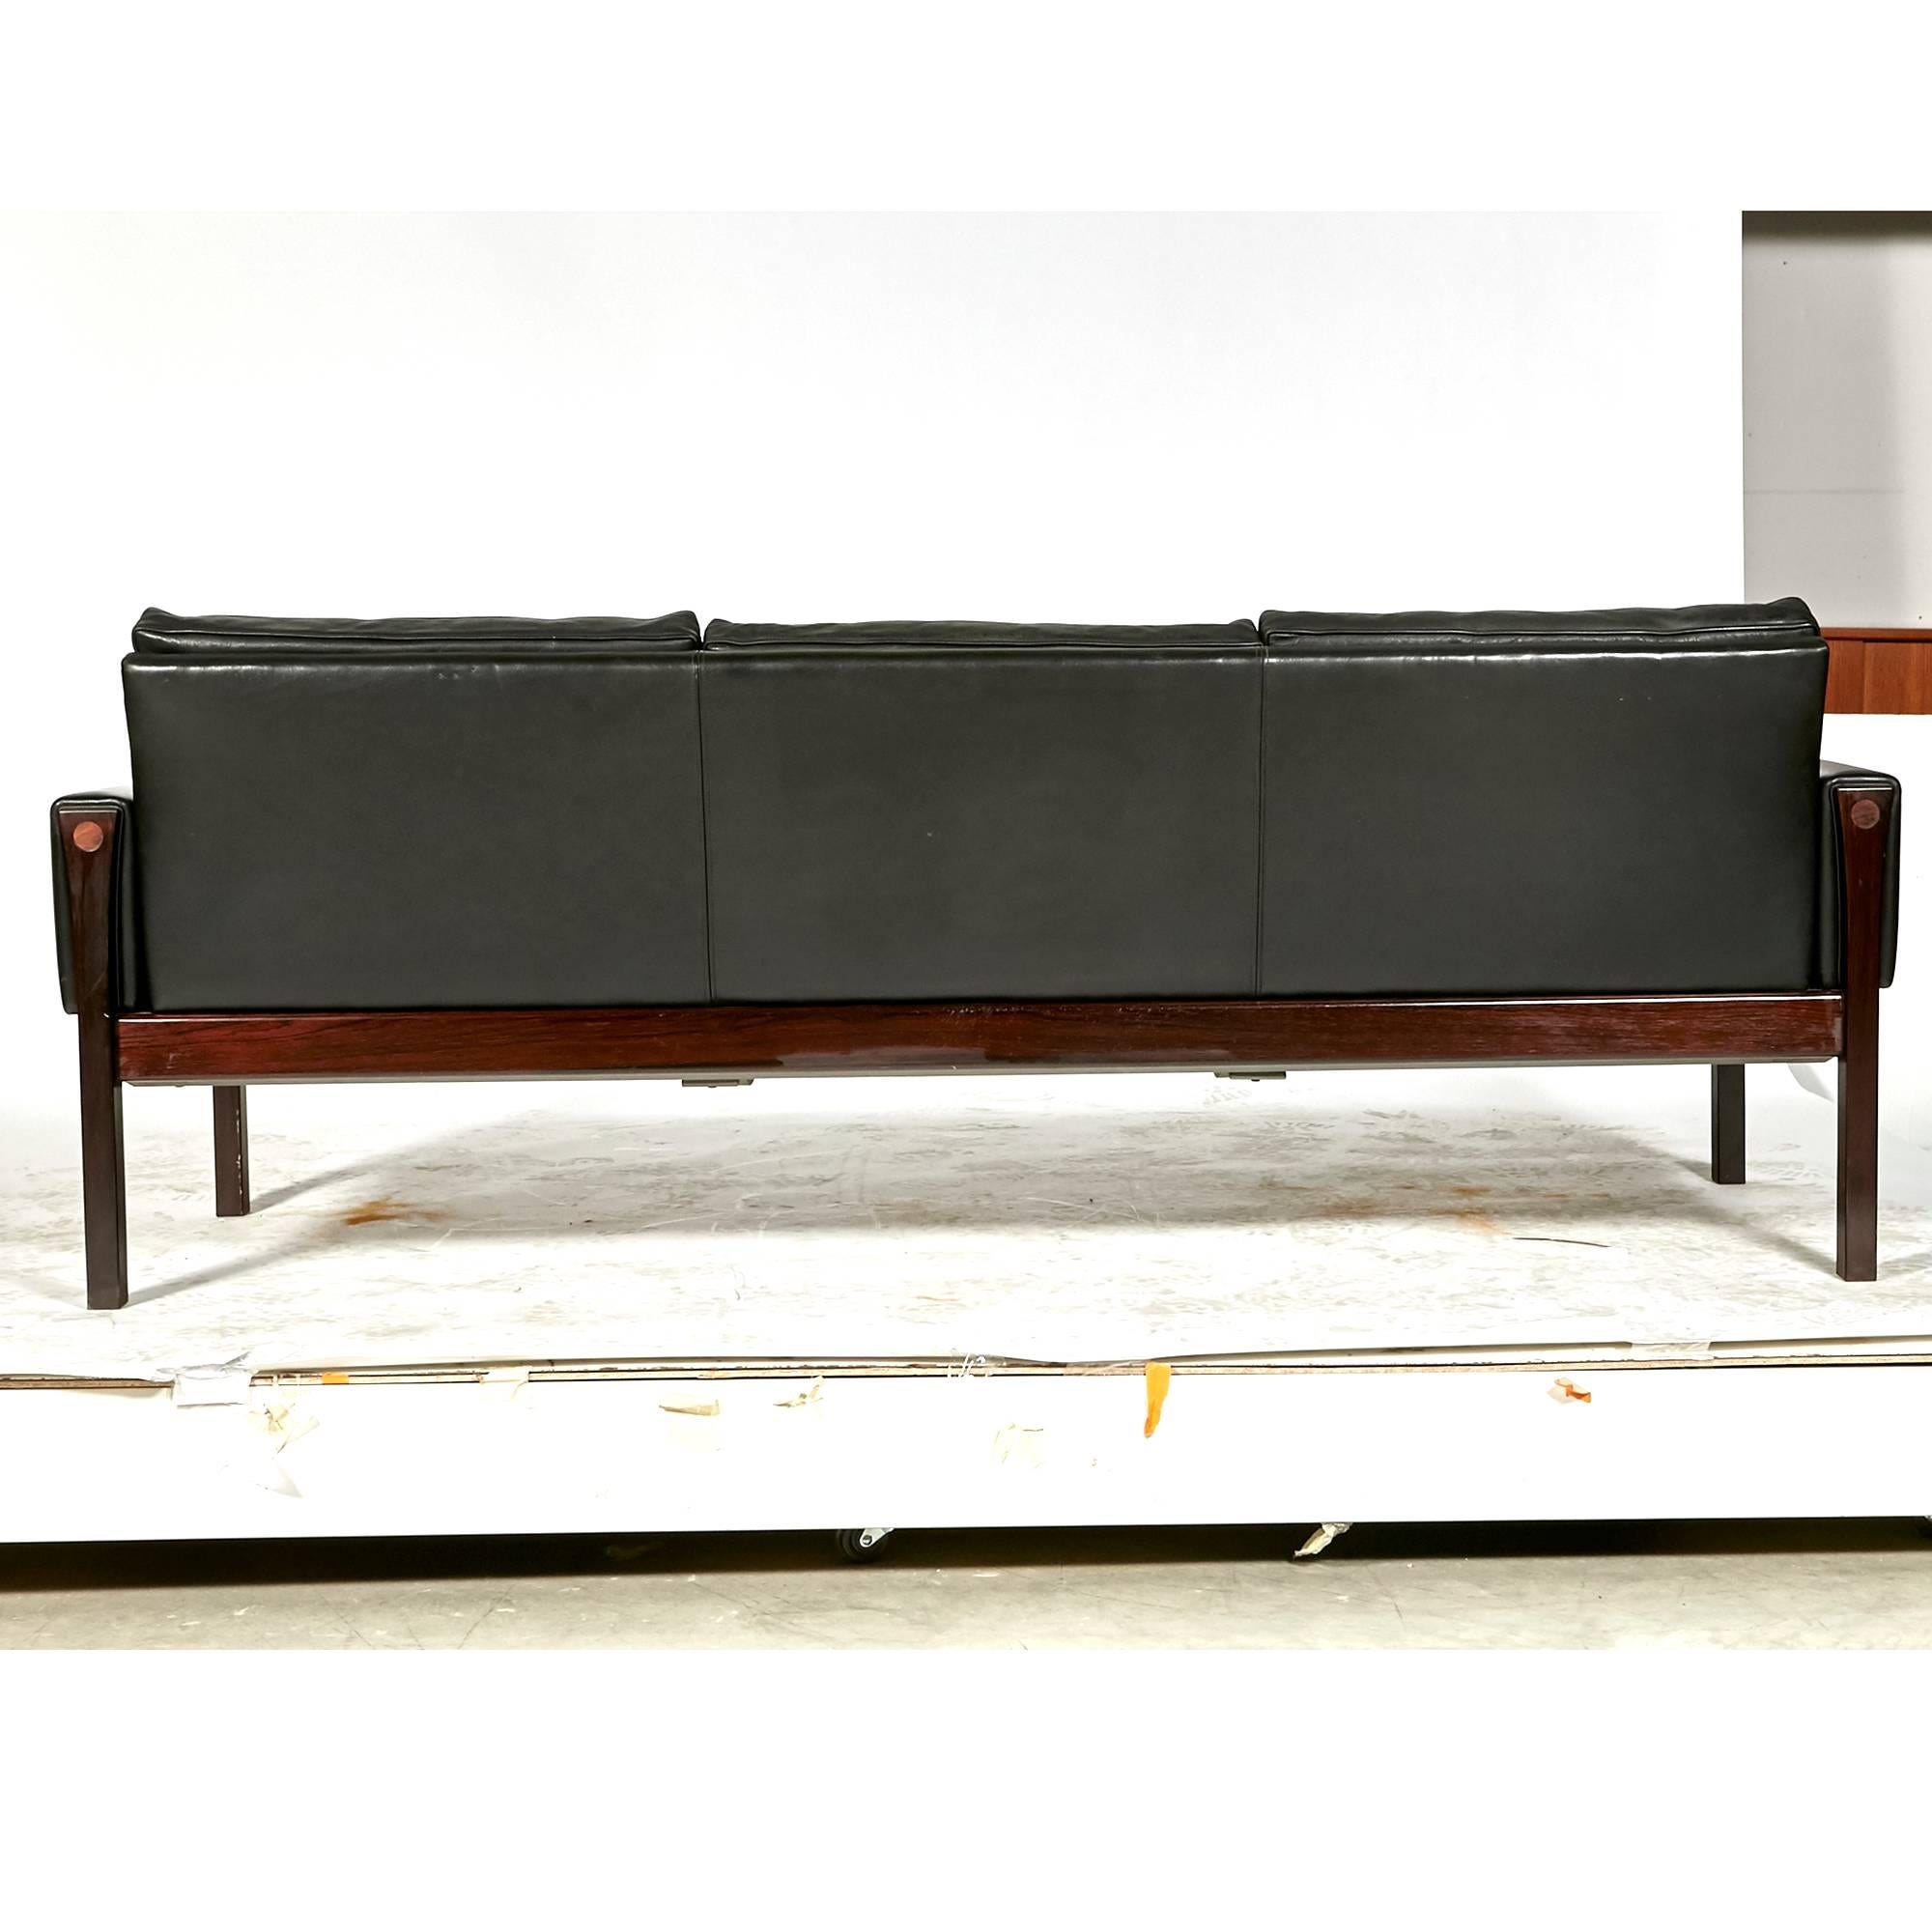 20th Century Hans J. Wegner Rosewood and Black Leather Sofa, Denmark